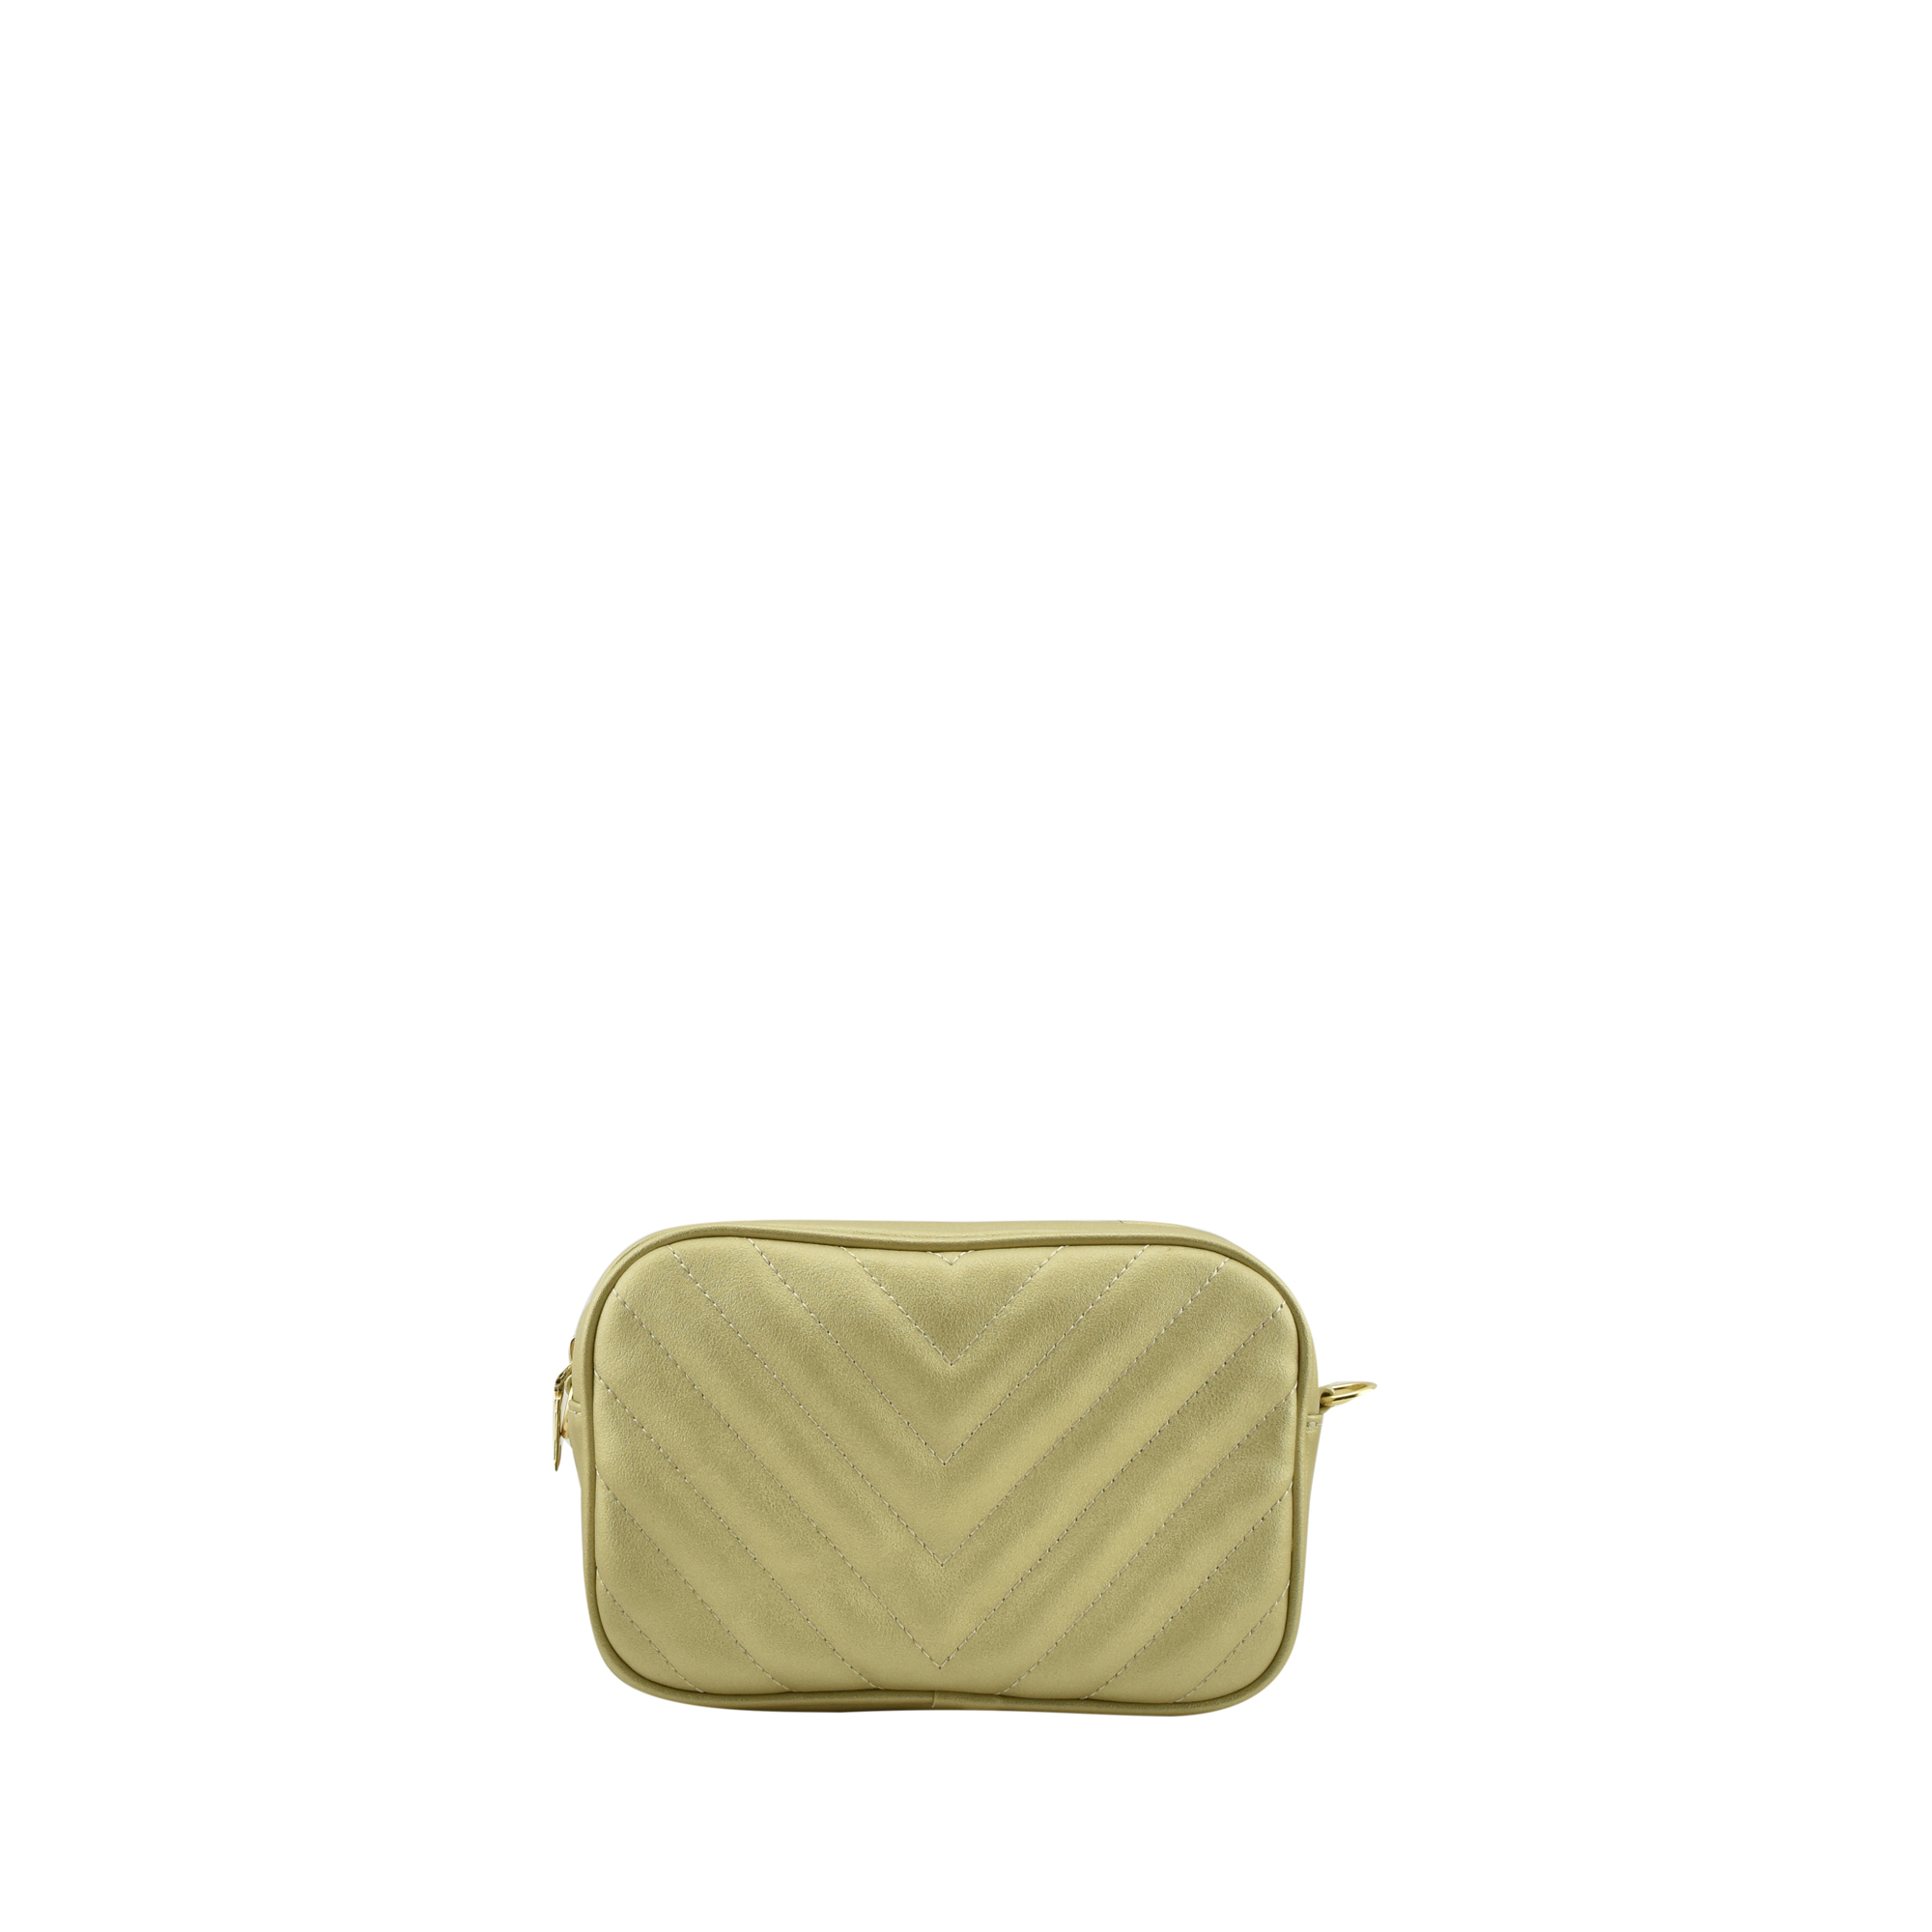 GESSY CLASSIC LOVE SHOULDER BAG - 833 GOLD